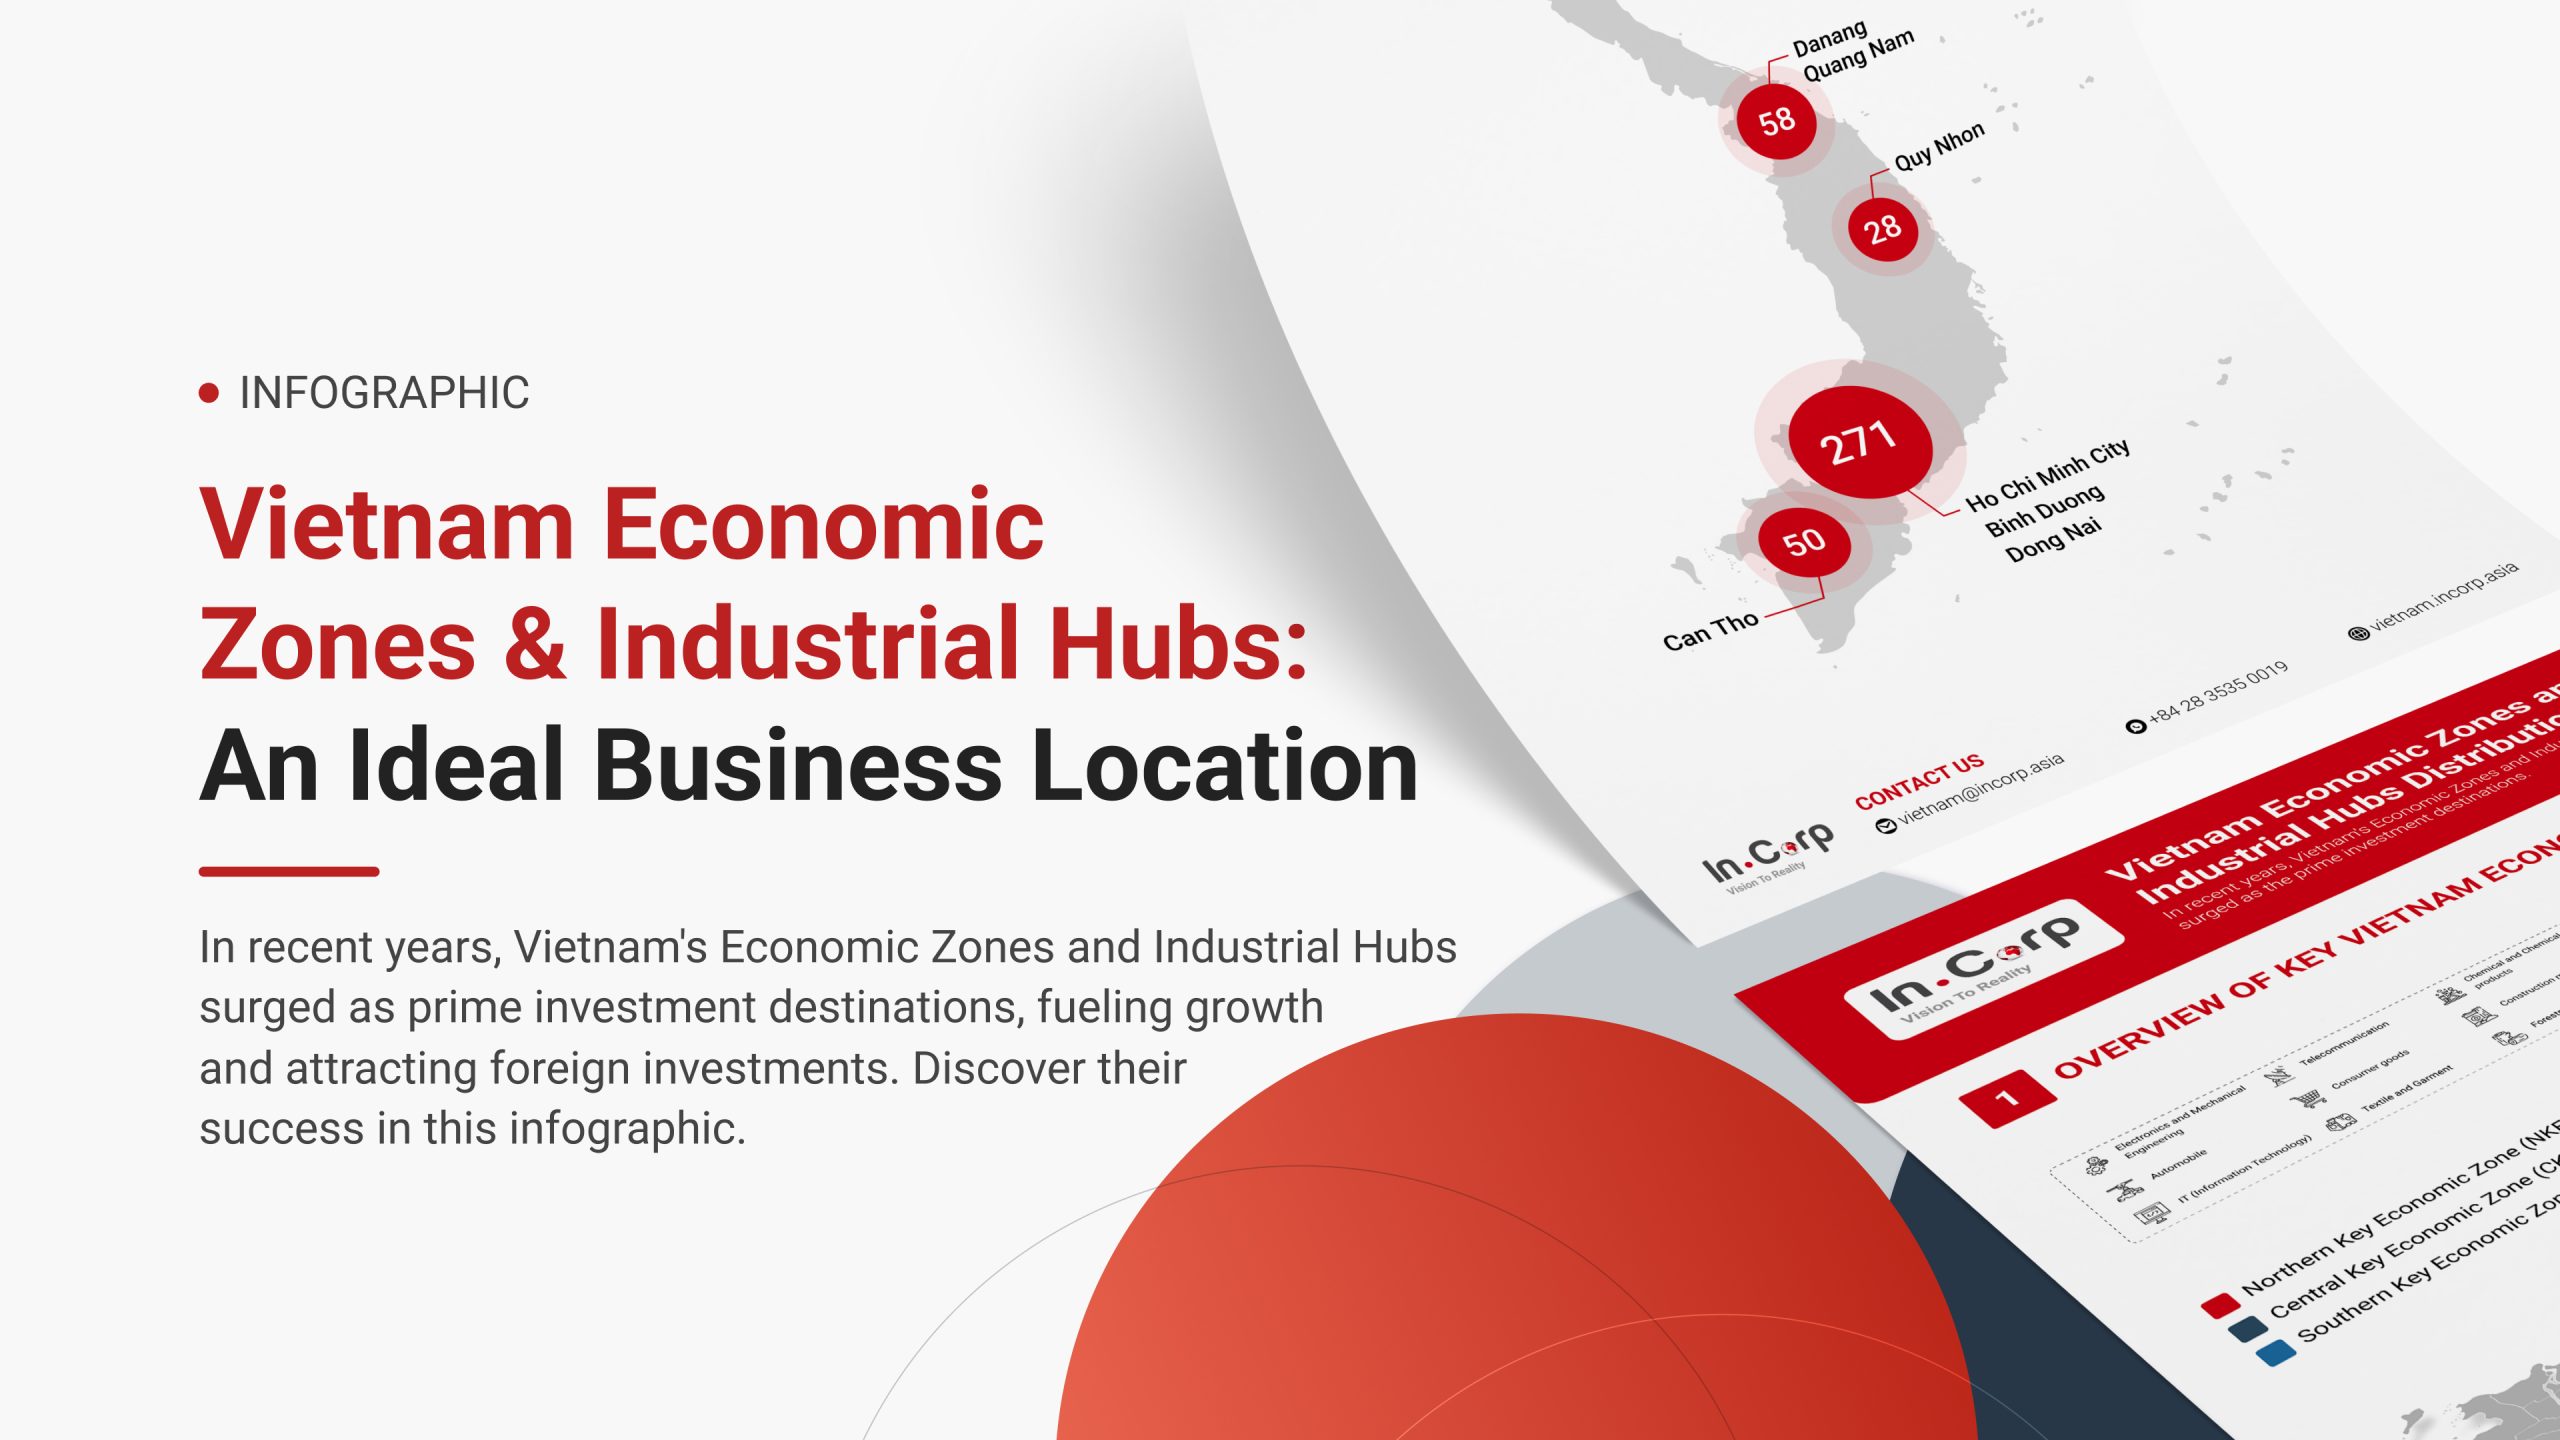 Vietnam Economic Zones & Industrial Hubs: An Ideal Business Location for Investors